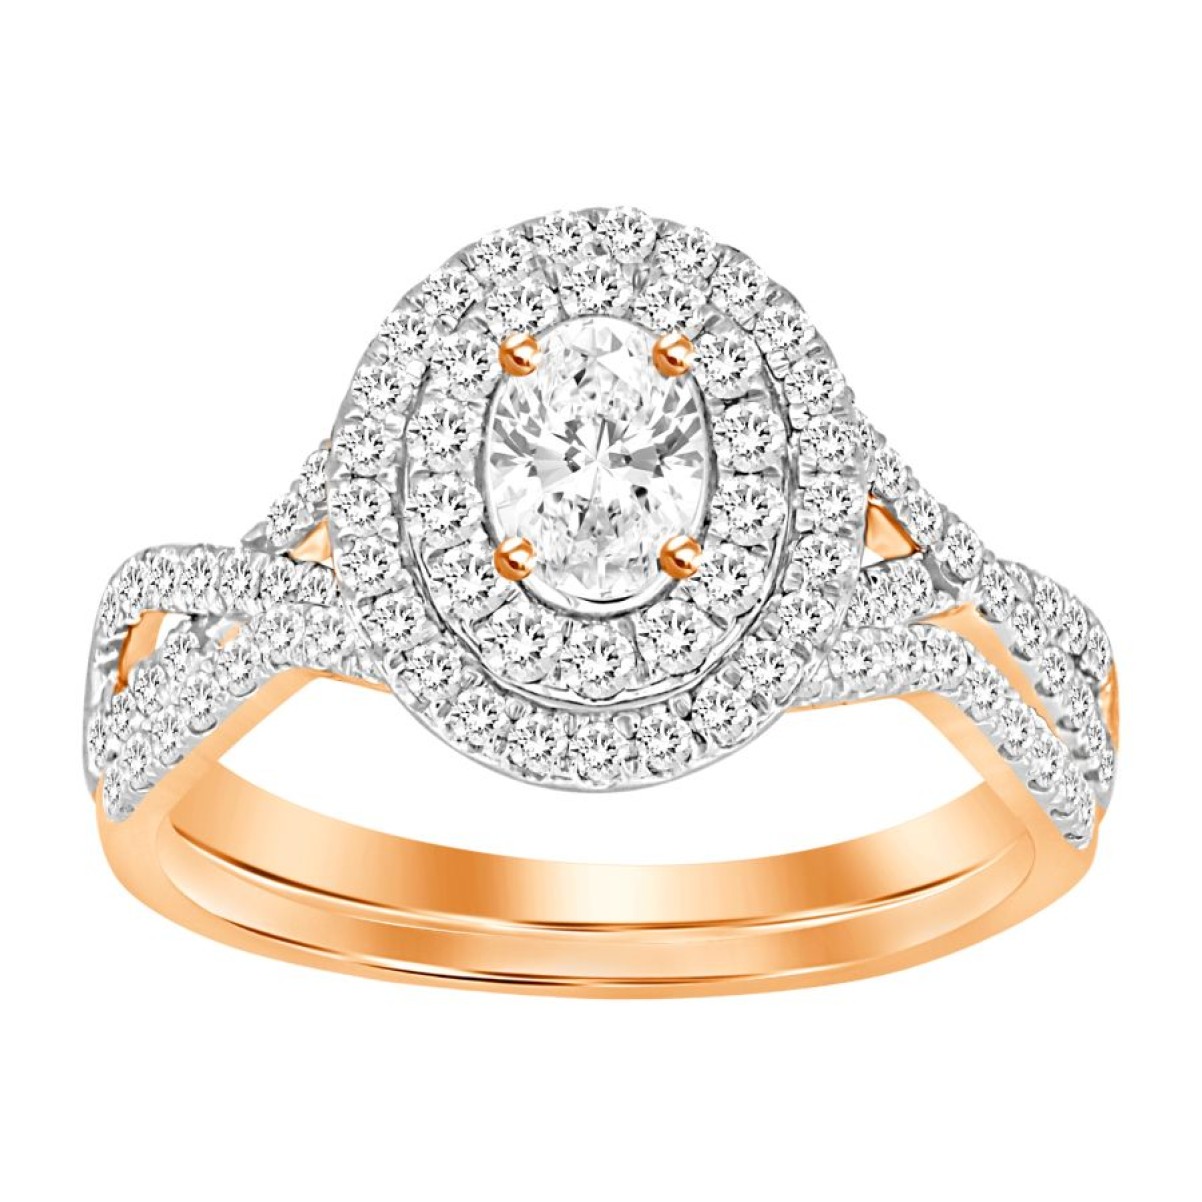 BRIDAL RING SET 1.00CT ROUND/OVAL DIAMOND 14K ROSE GOLD